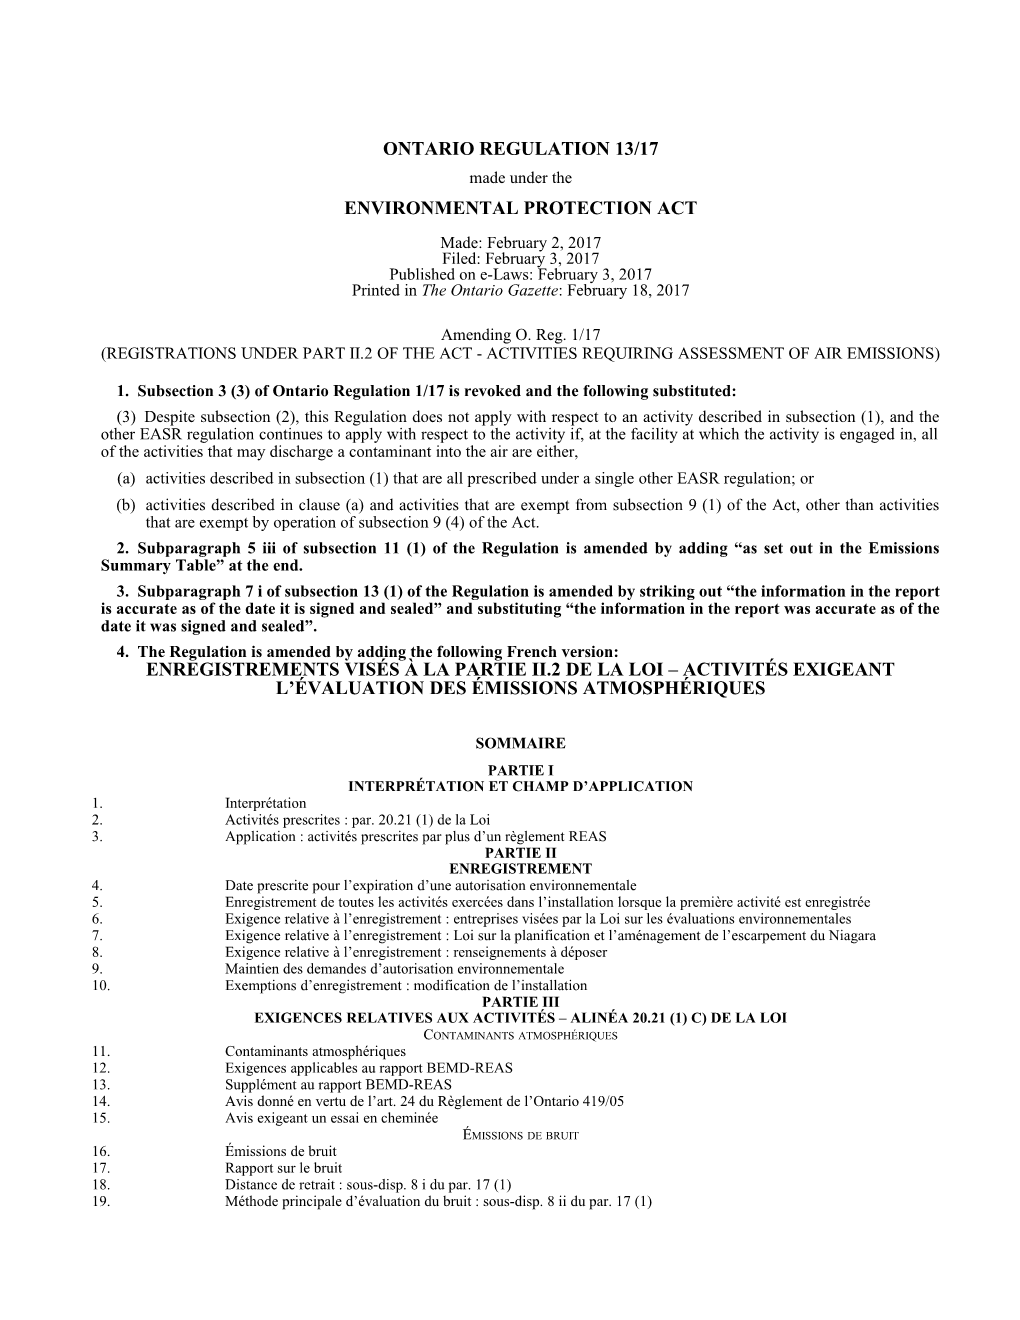 ENVIRONMENTAL PROTECTION ACT - O. Reg. 13/17